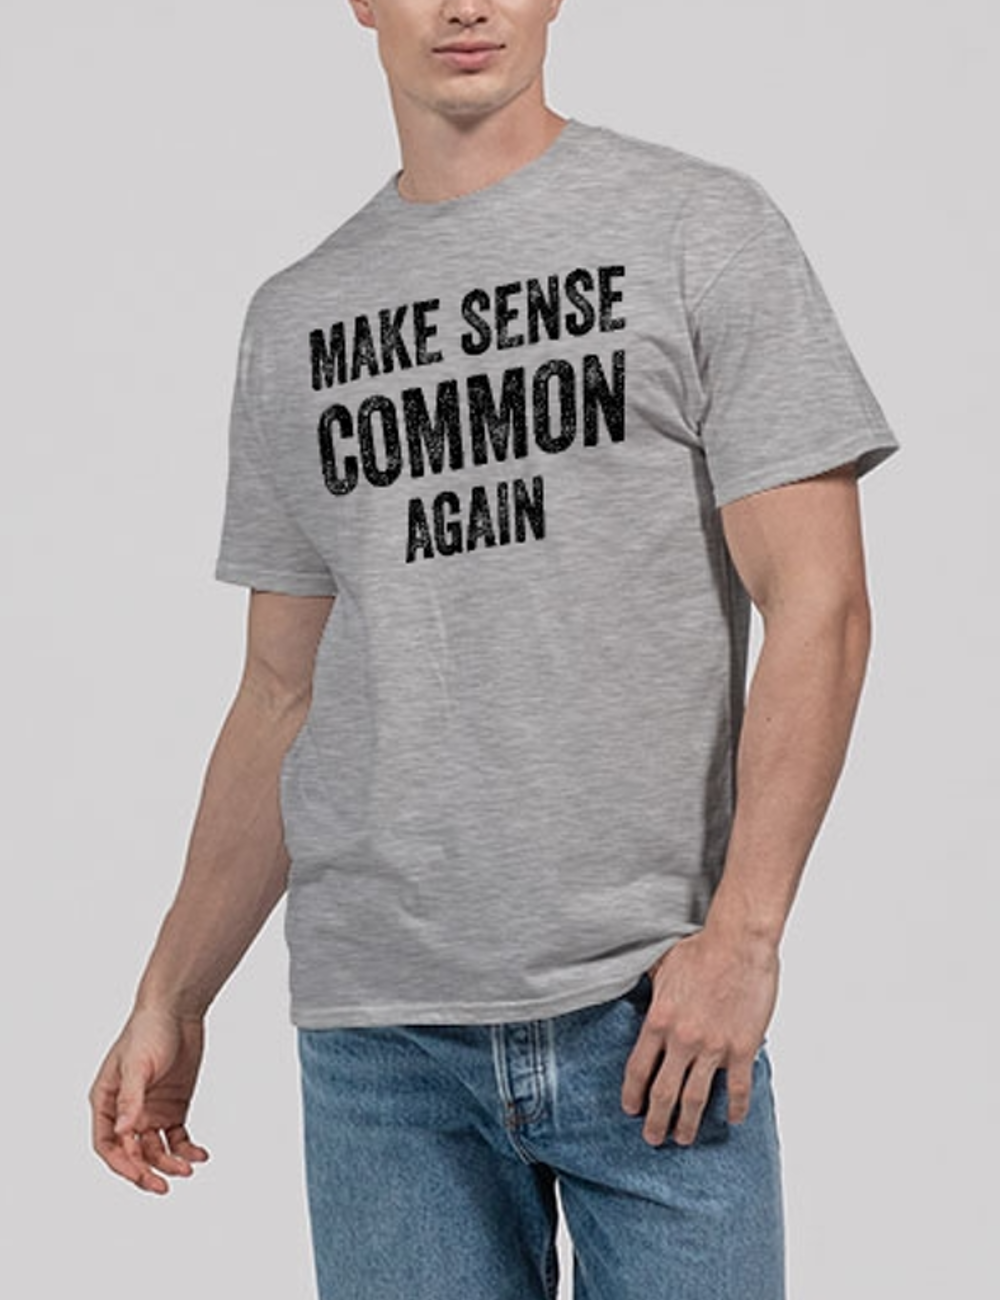 Make Sense Common Again Men's Classic T-Shirt OniTakai